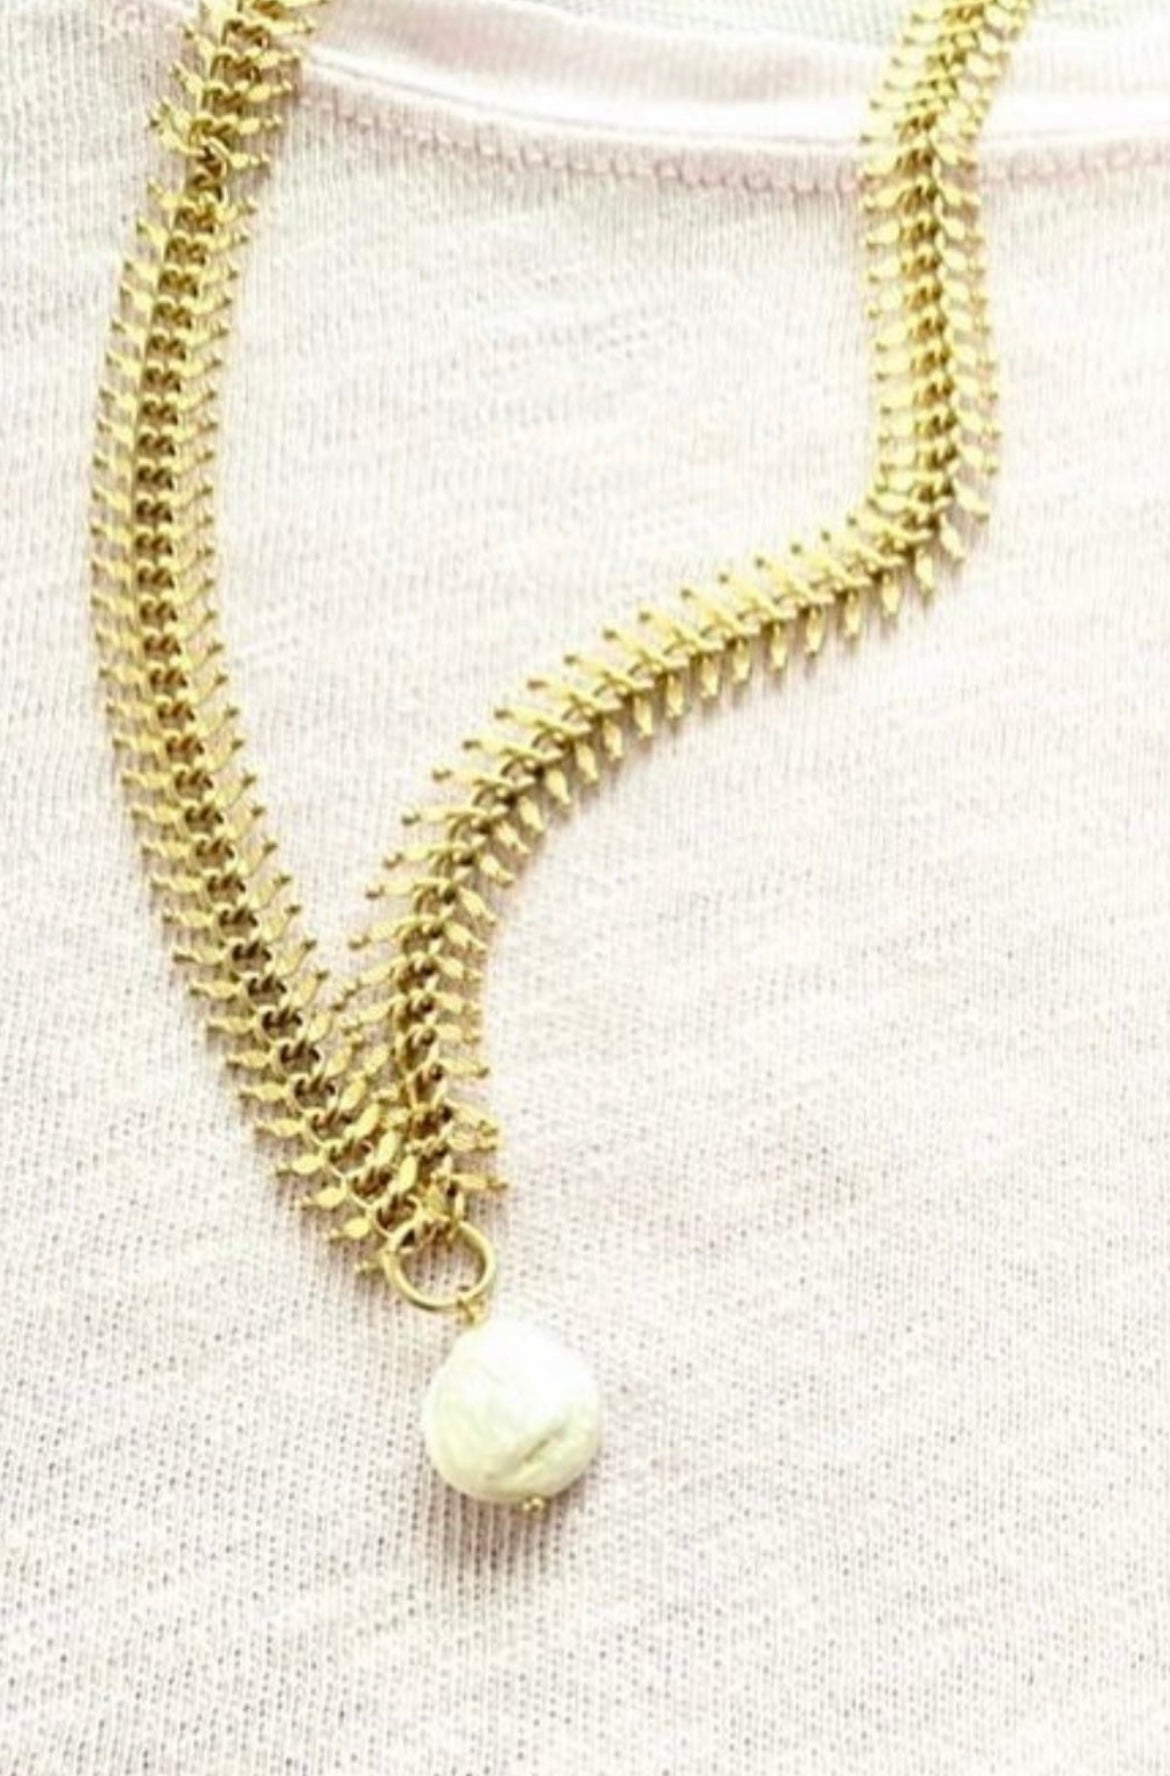 Girls love pearls